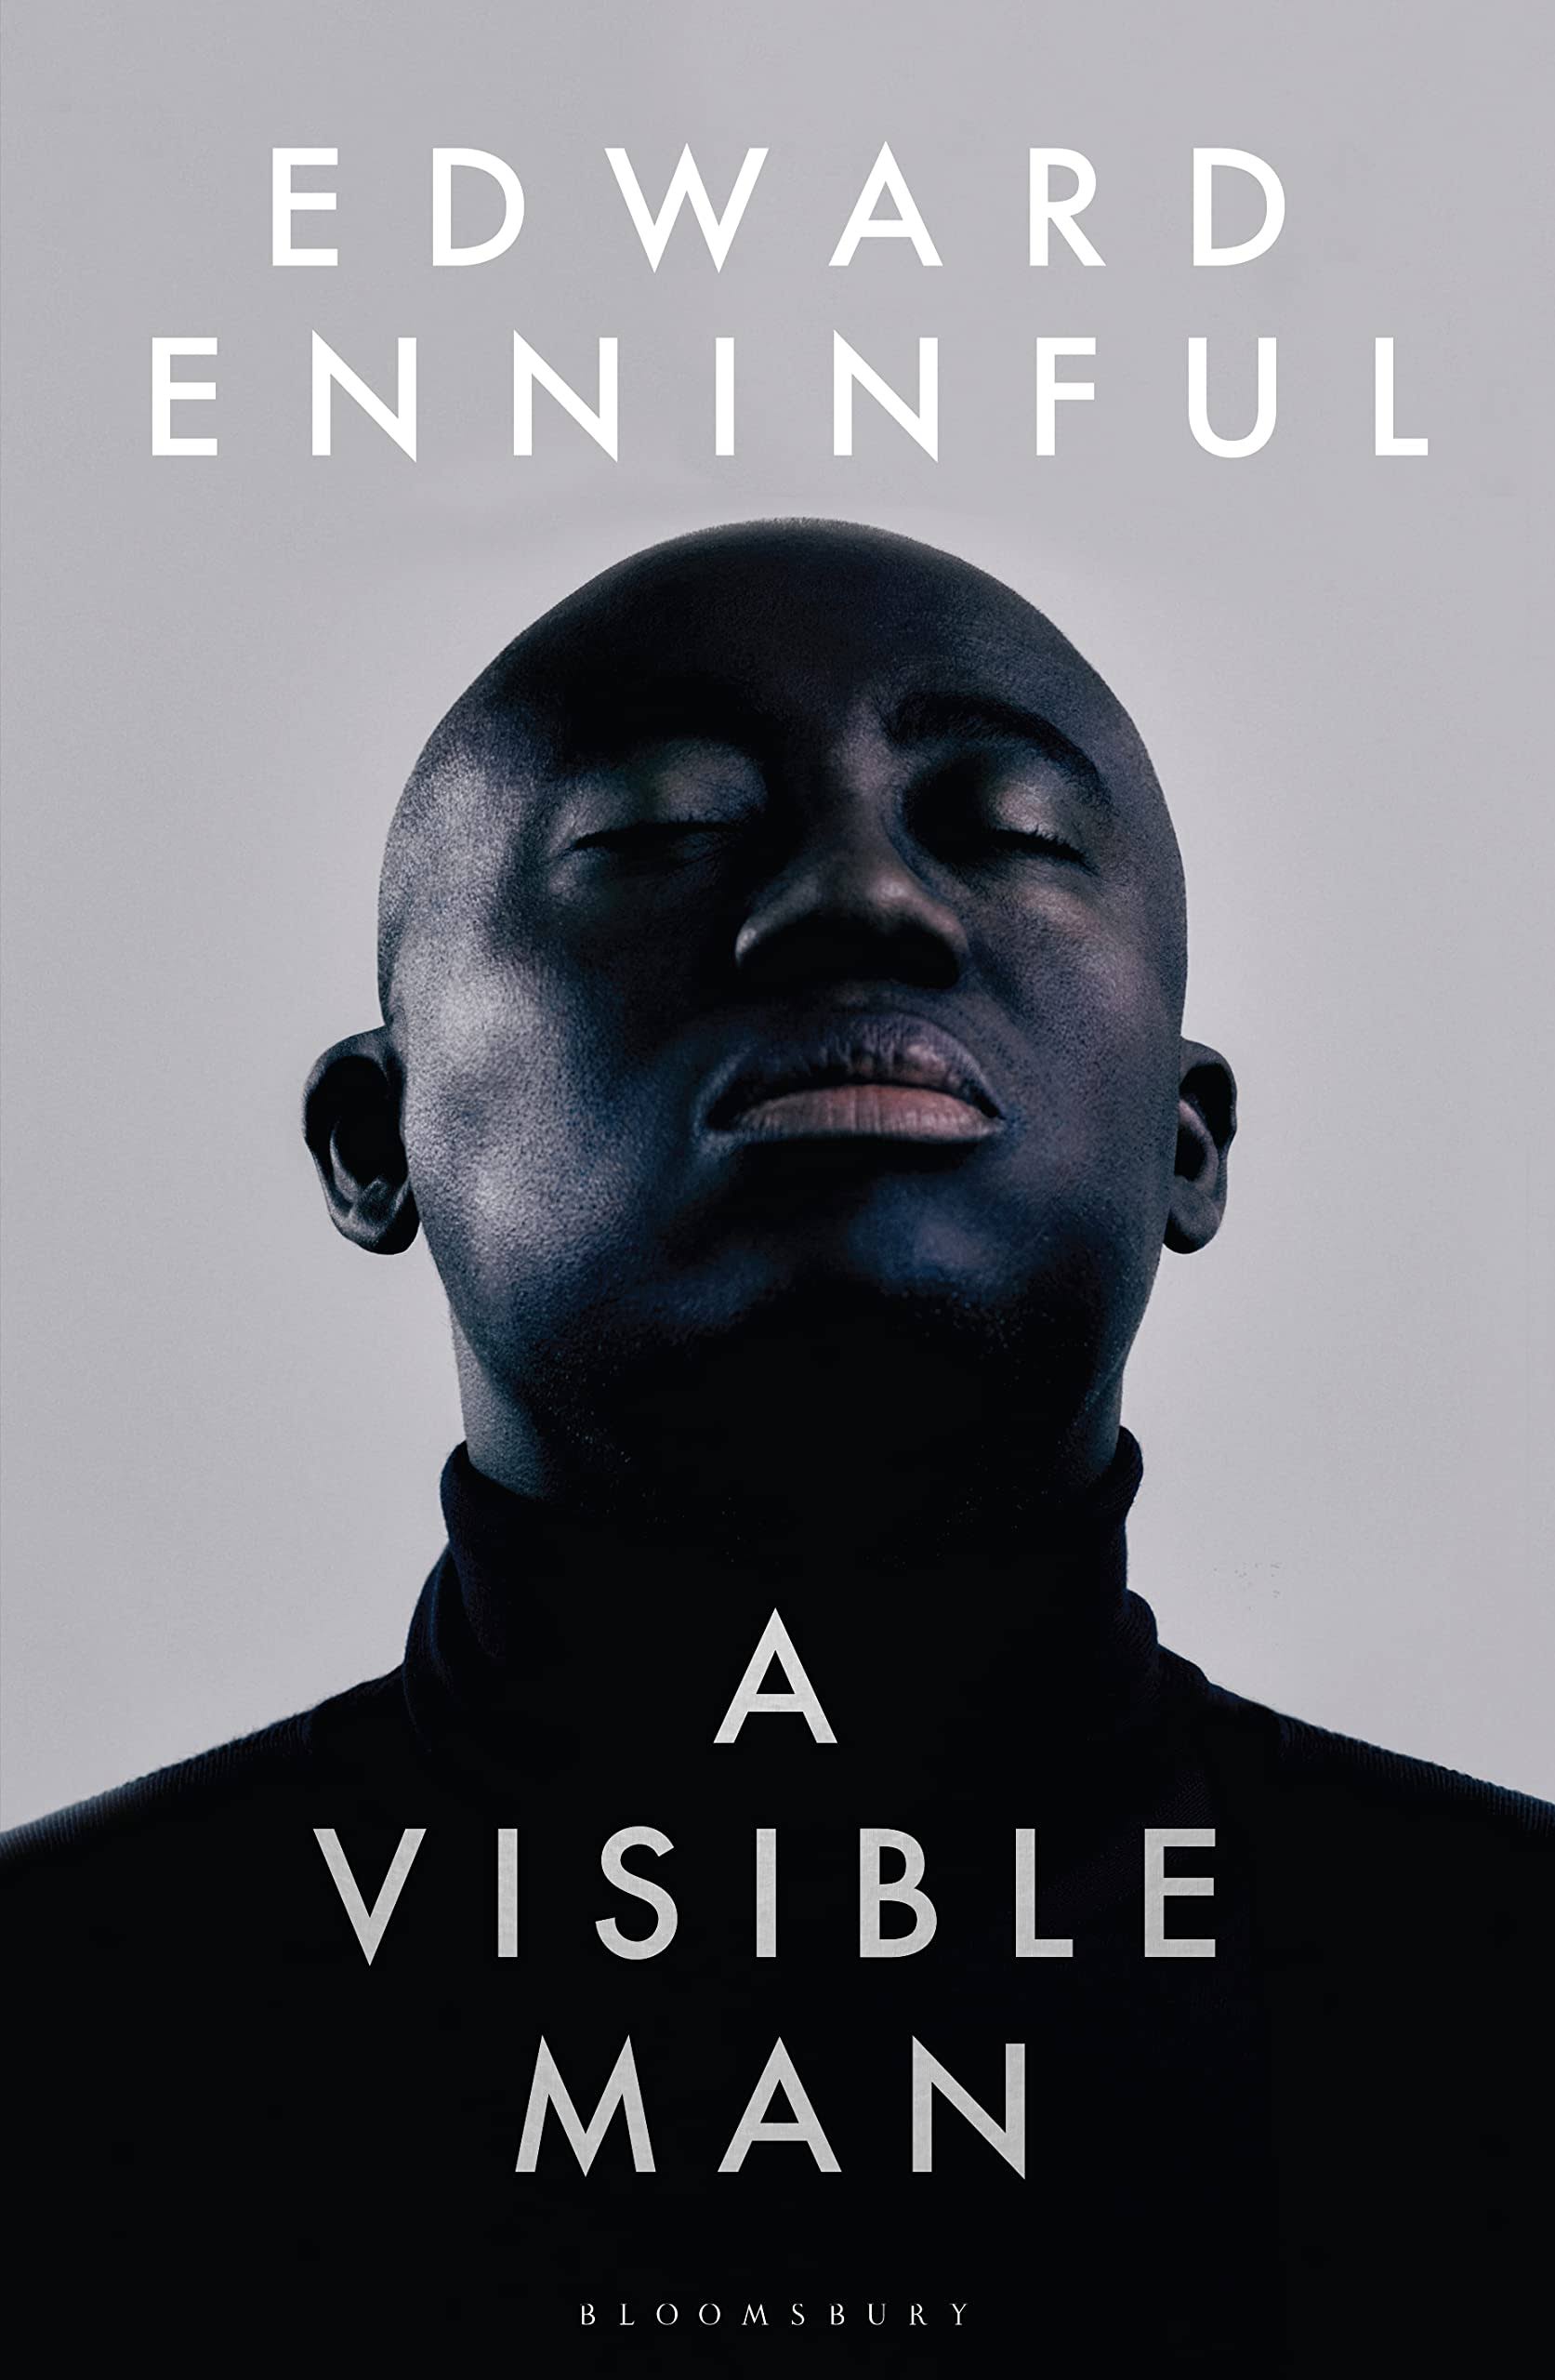 A Visible Man by Edward Enninful